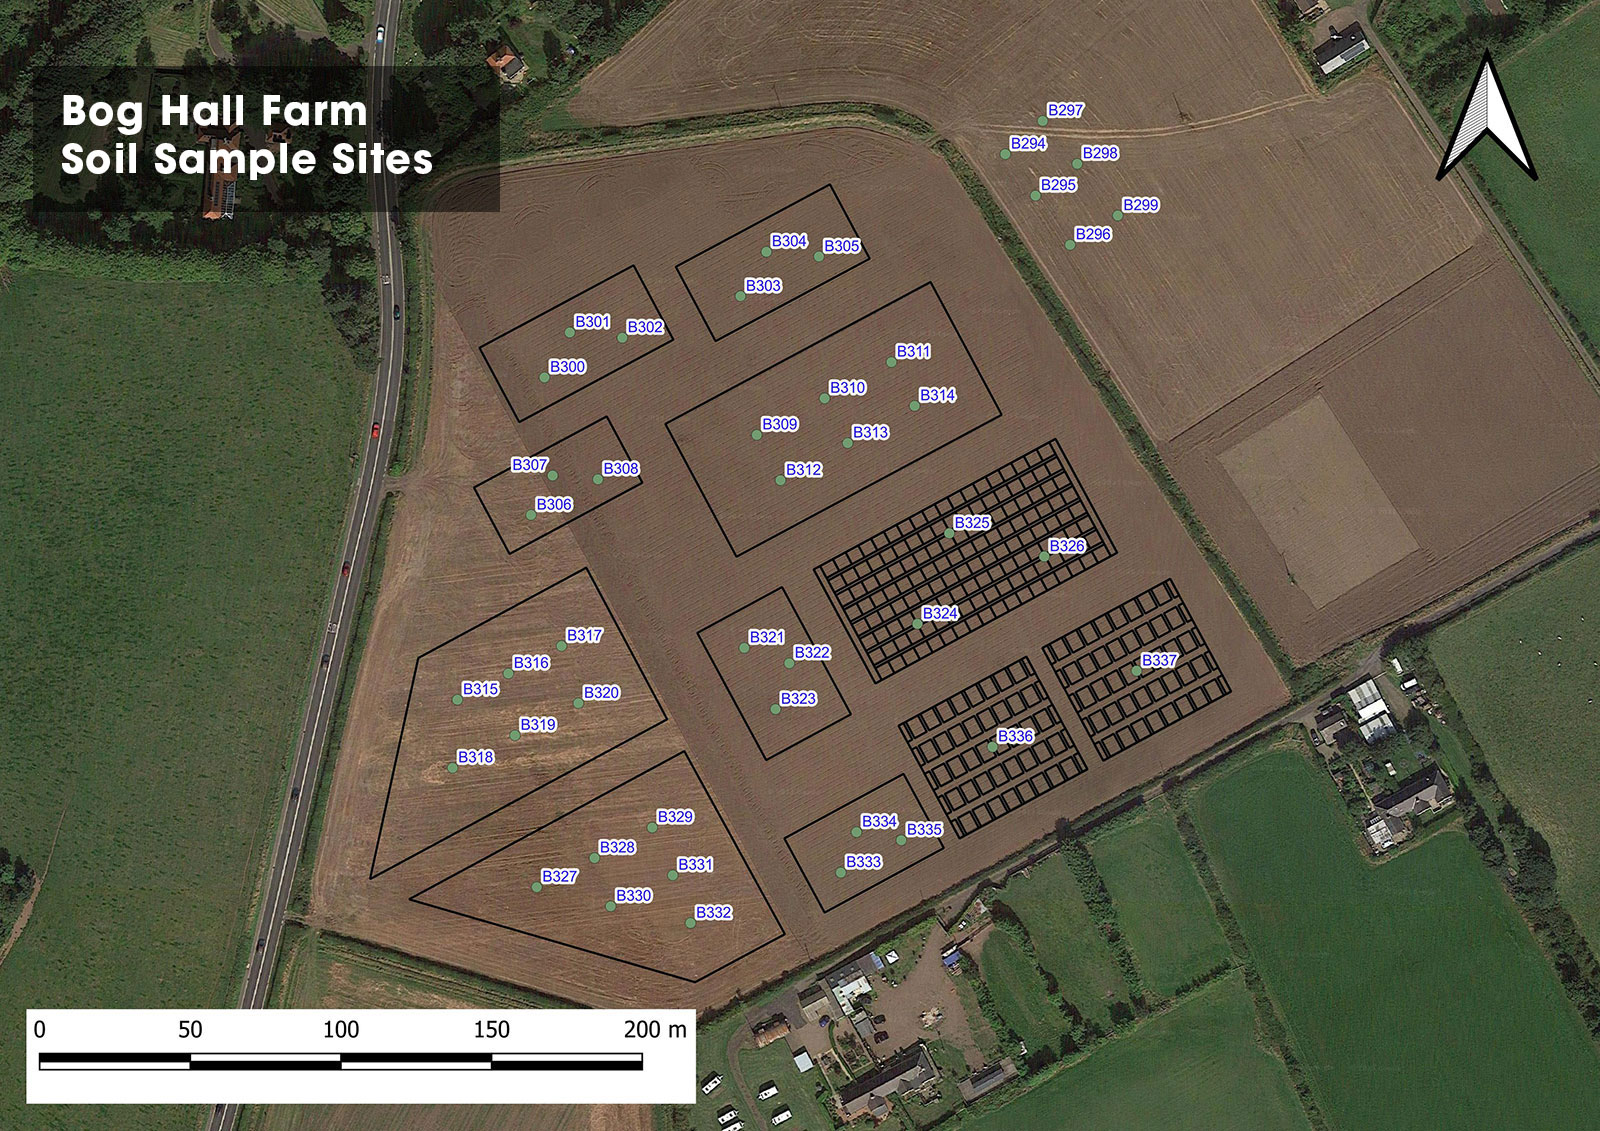 Bog Hall Farm Soil Sample Locations